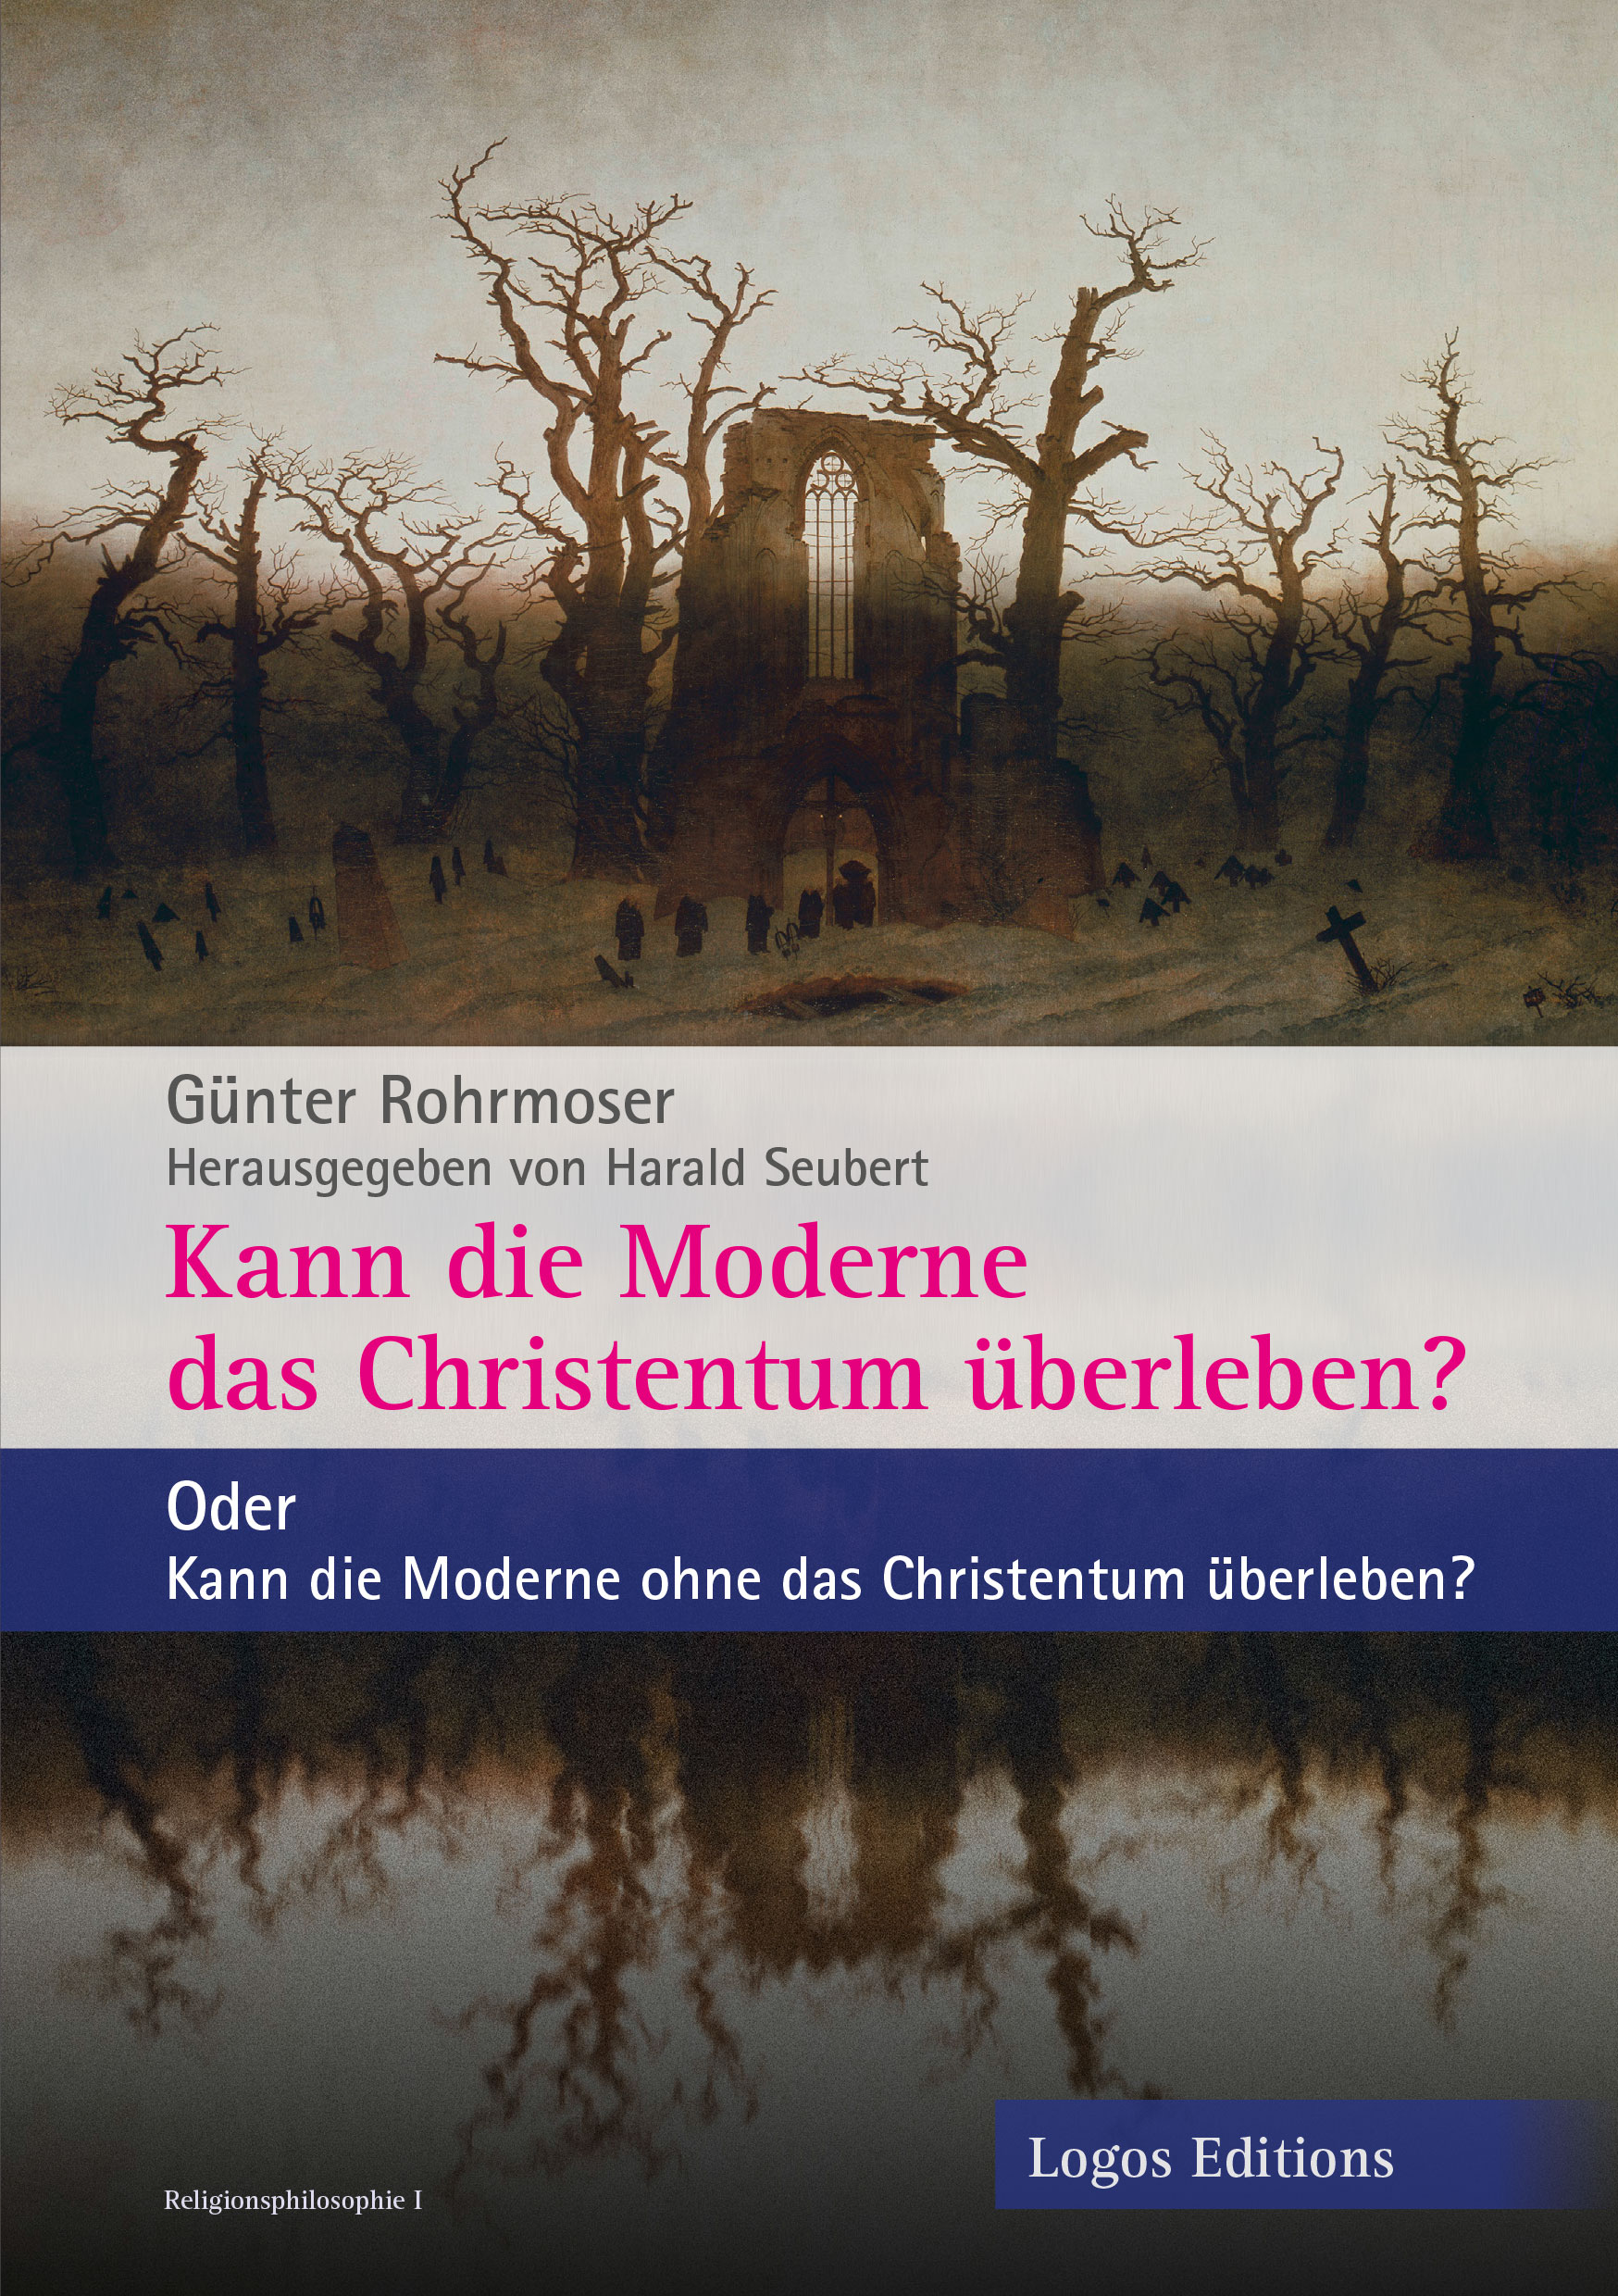 Günter Rohrmoser, Harald Seubert (Hrsg.) „Kann die Moderne das Christentum überleben?“ – oder Kann die Moderne ohne das Christentum überleben?